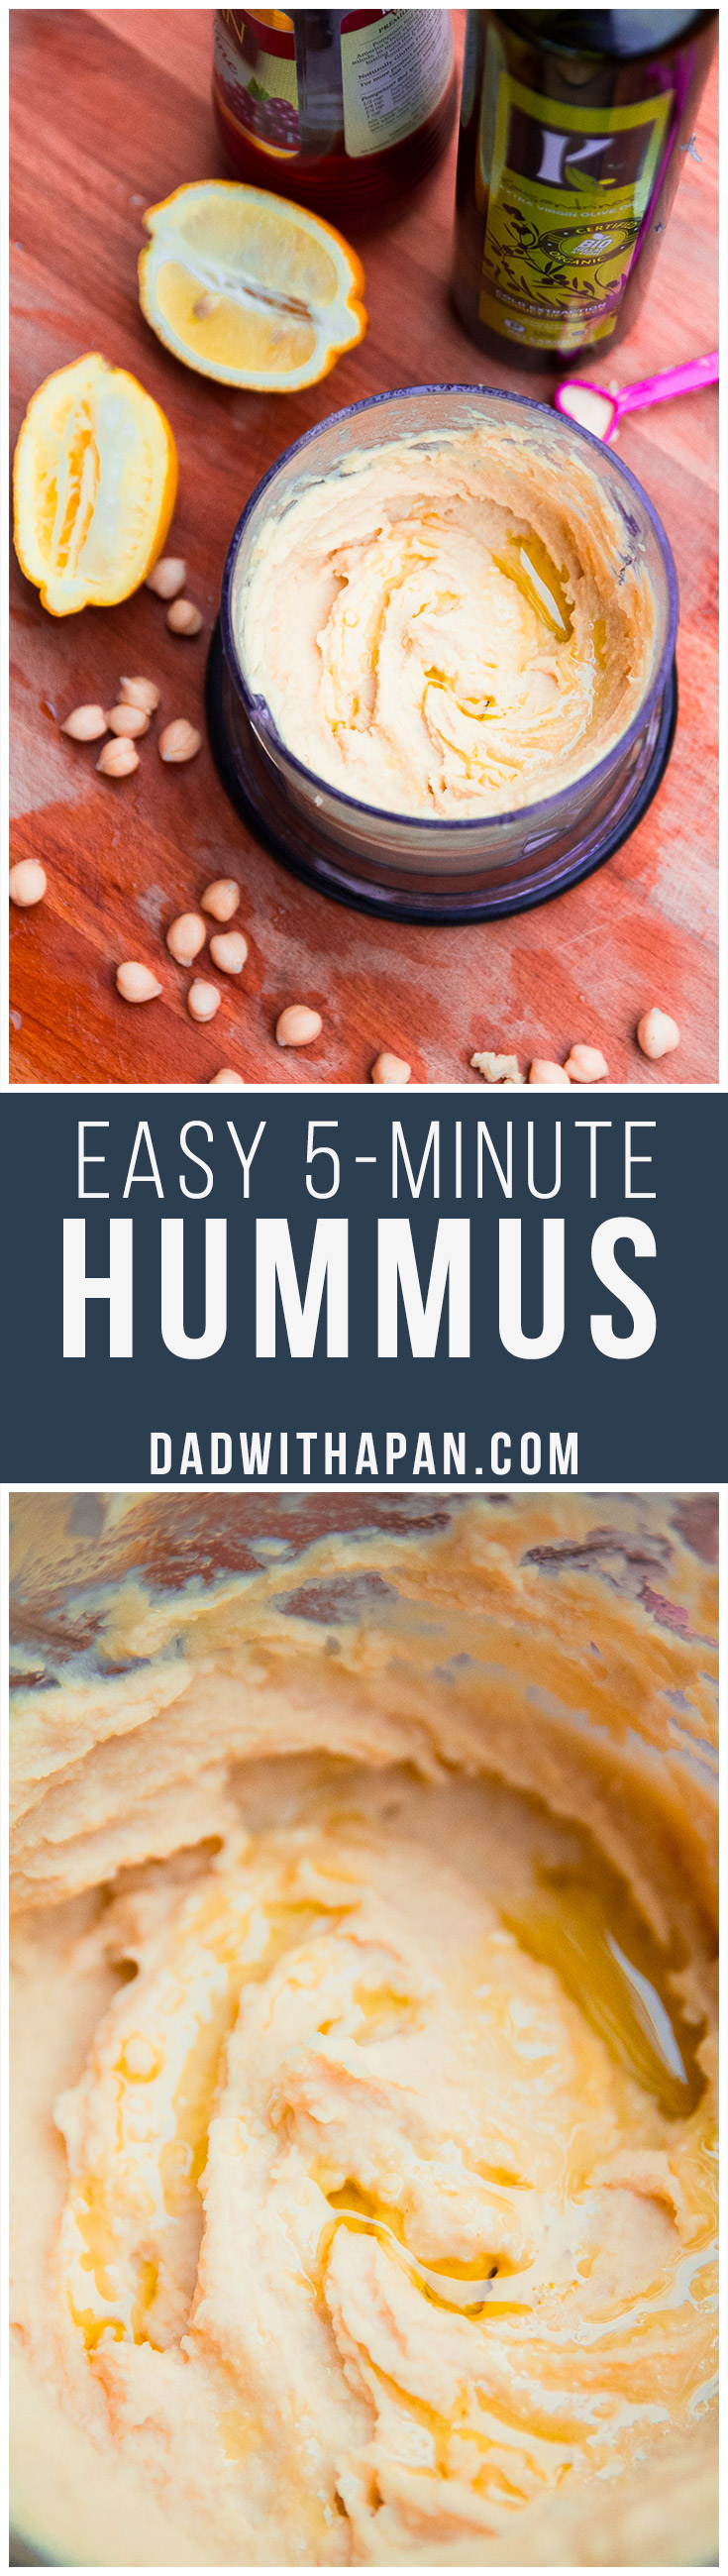 Easy 5-Minute Hummus